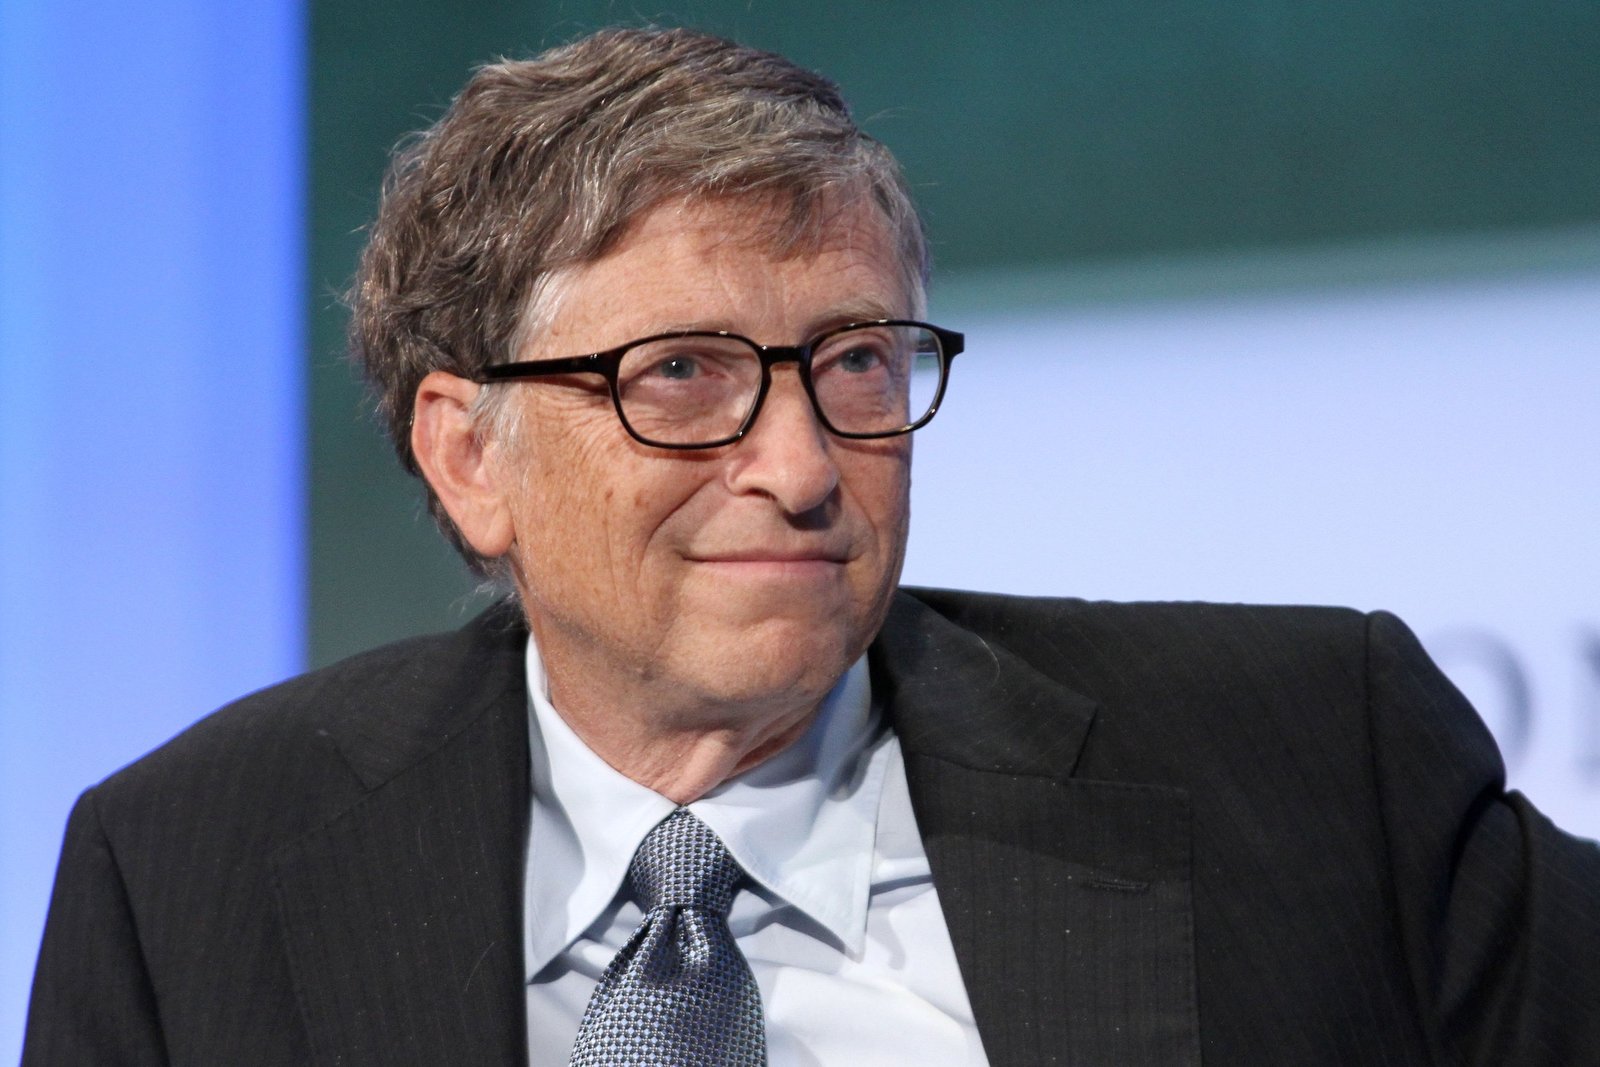 How Much Money Does Bill Gates Make?